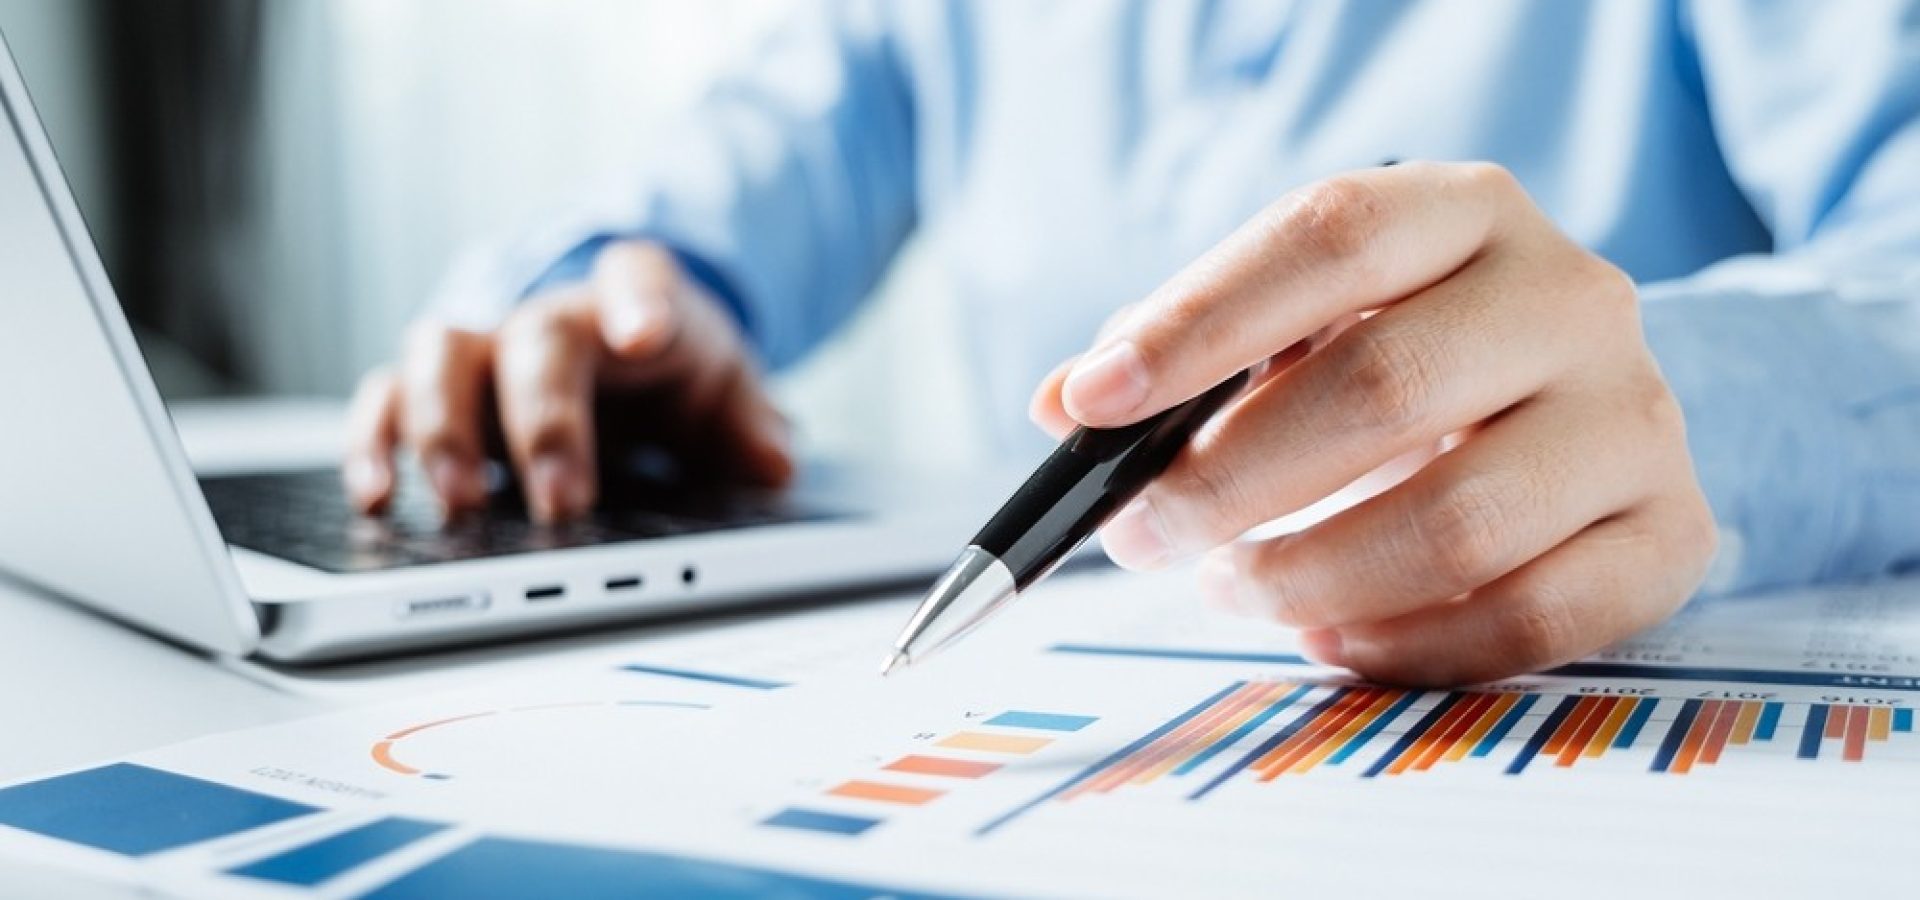 Understanding financial reports, Analysis